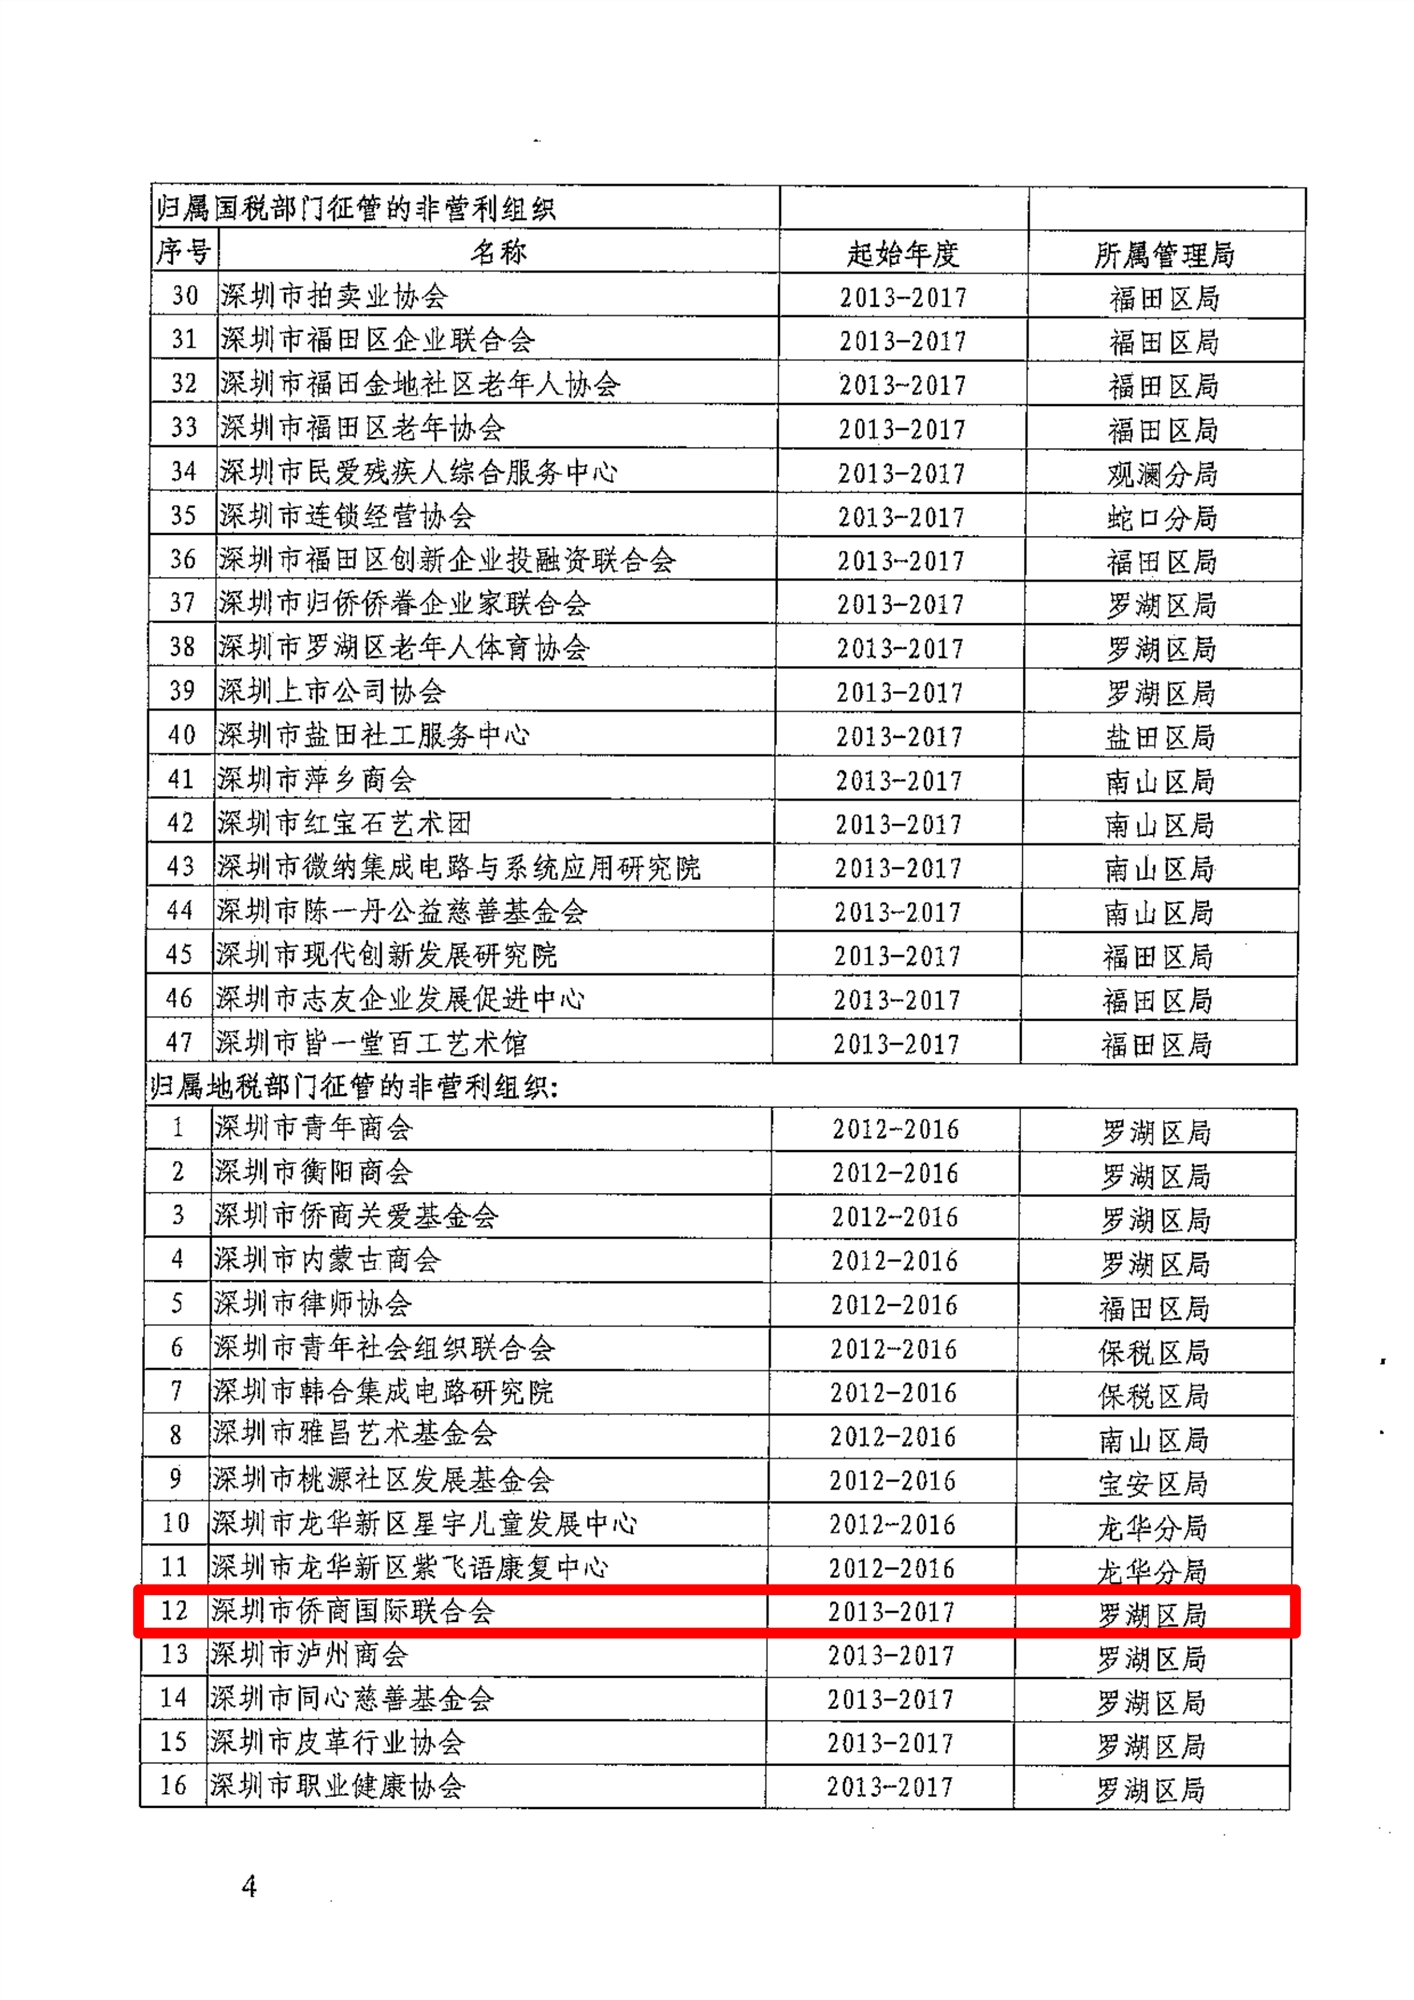 2014免税资格 (3).png